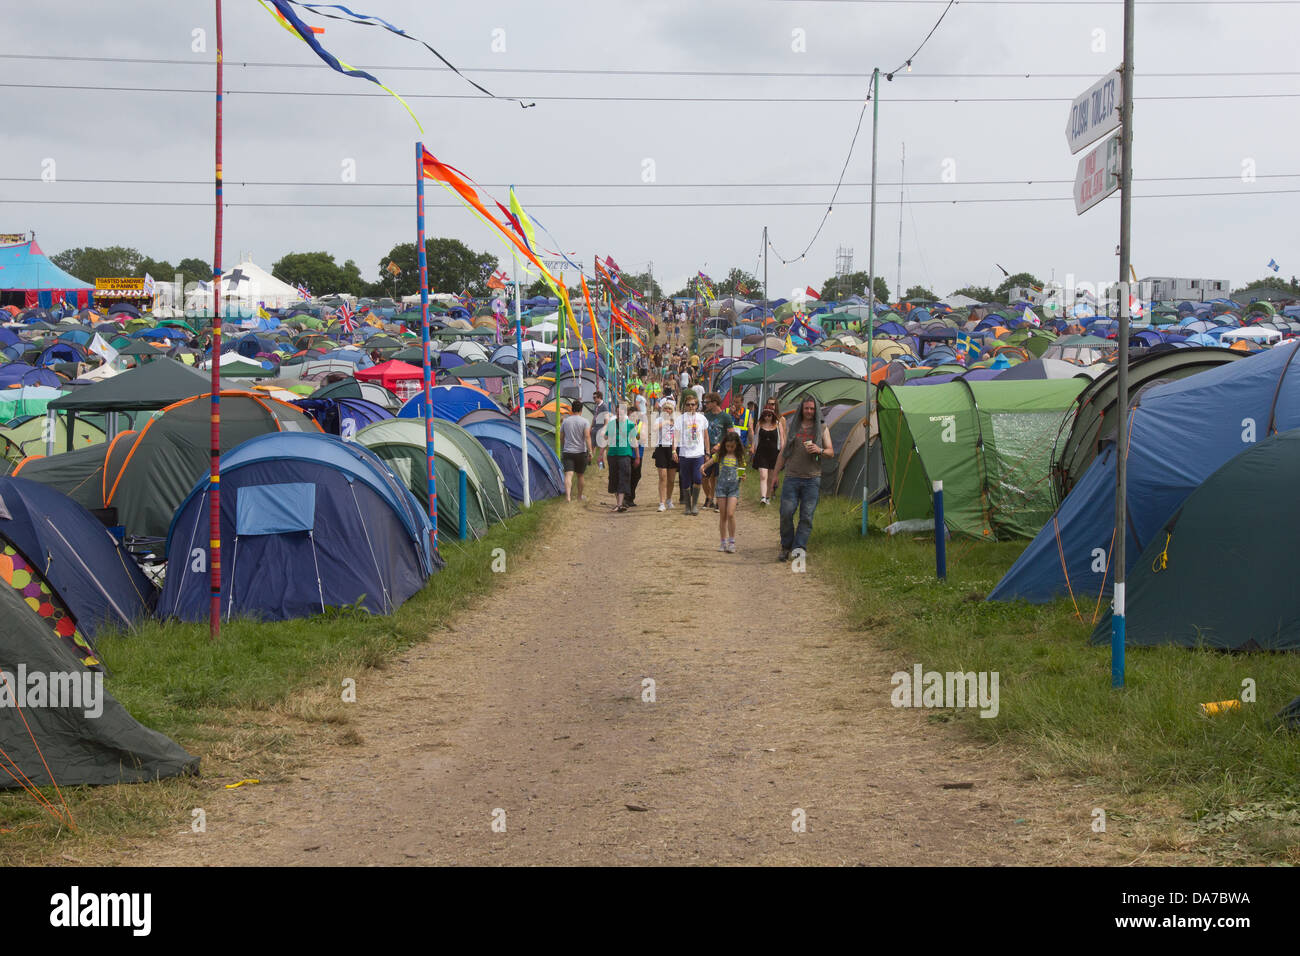 Campsite at the Glastonbury Festival,Pilton, Somerset, England, United Kingdom. Stock Photo